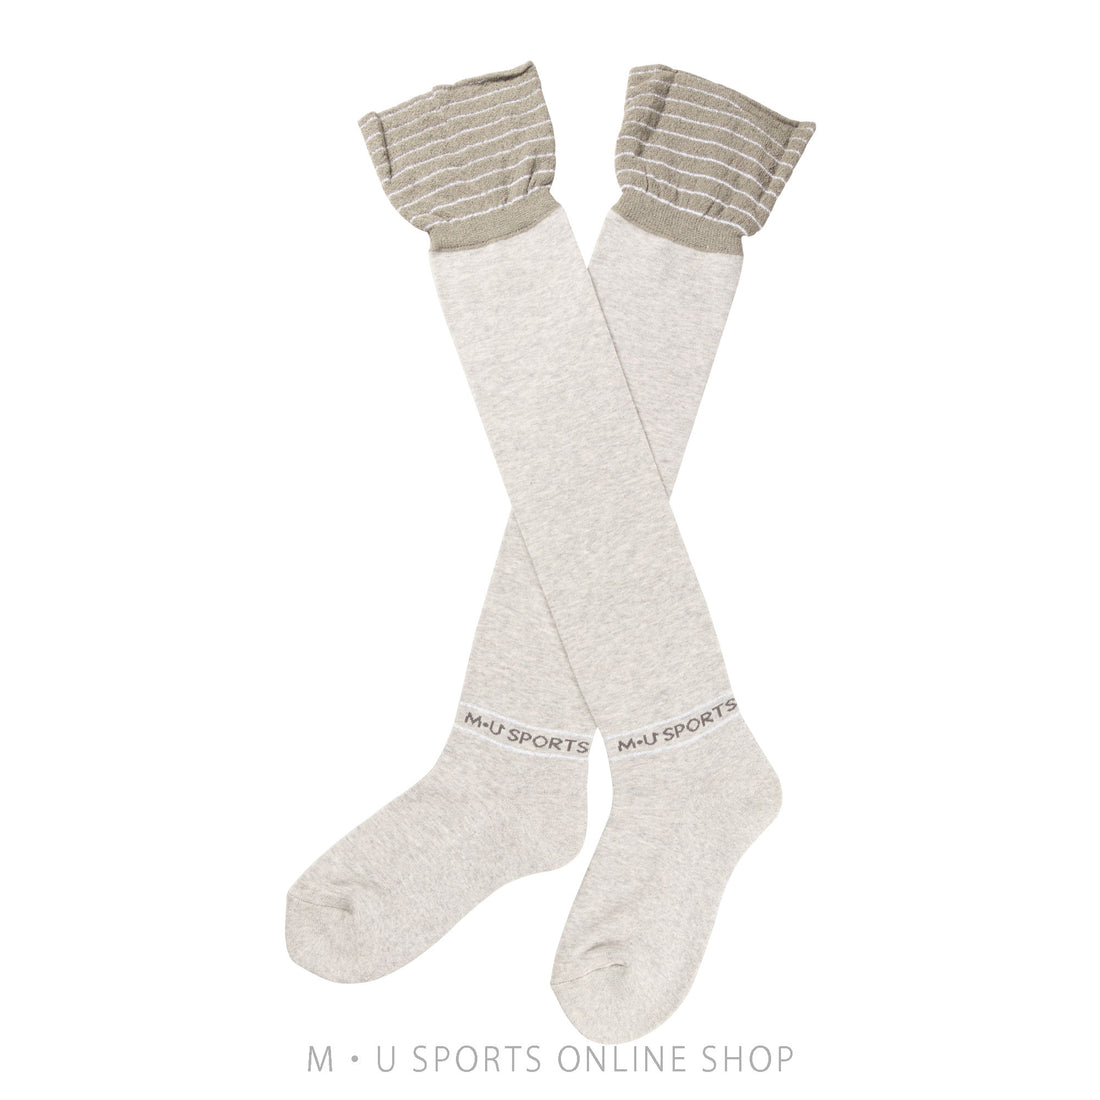 Knee-high socks (701J7758)